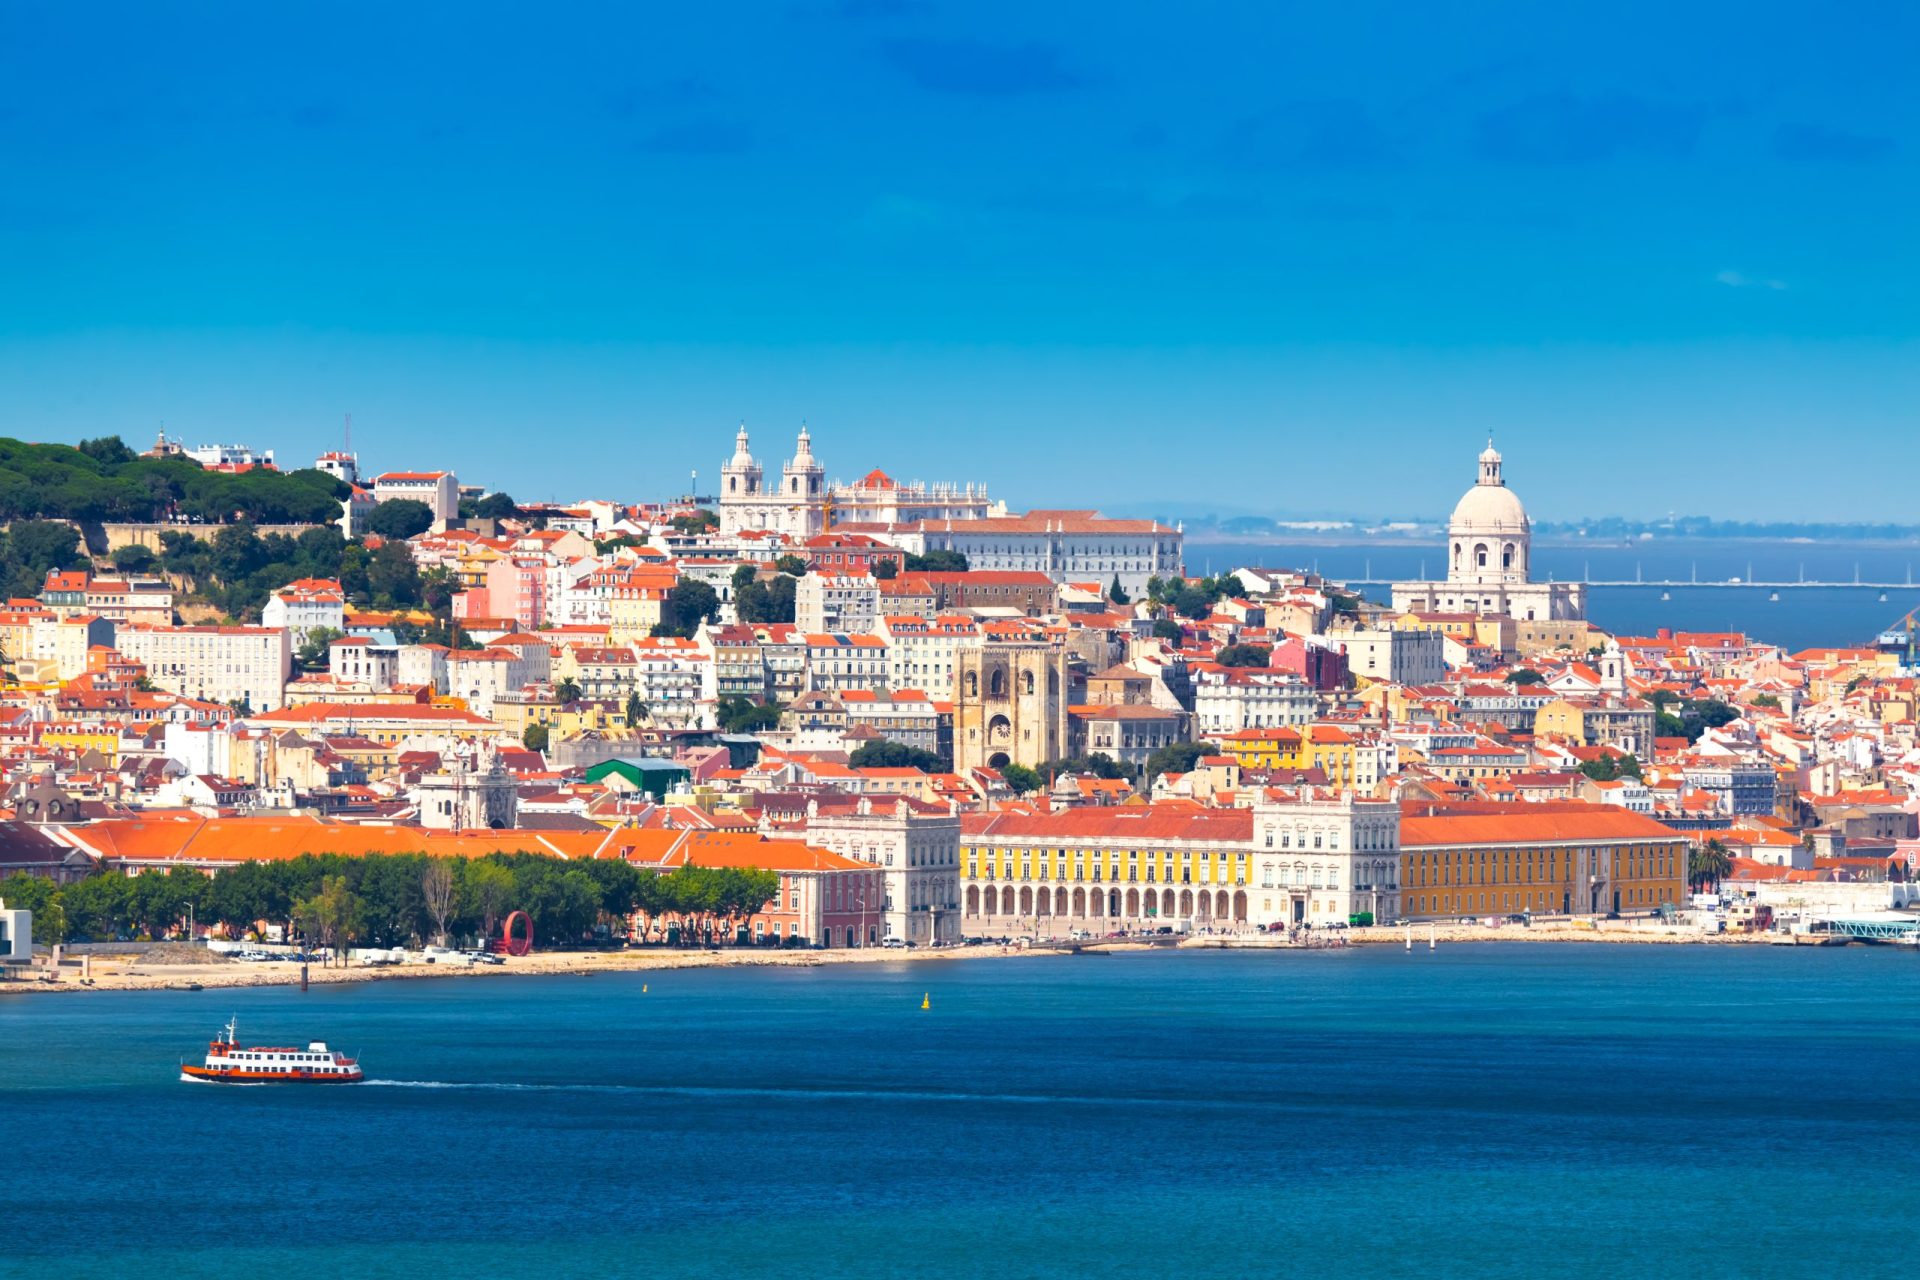 Lisboa recebe em dezembro os World Travel Awards